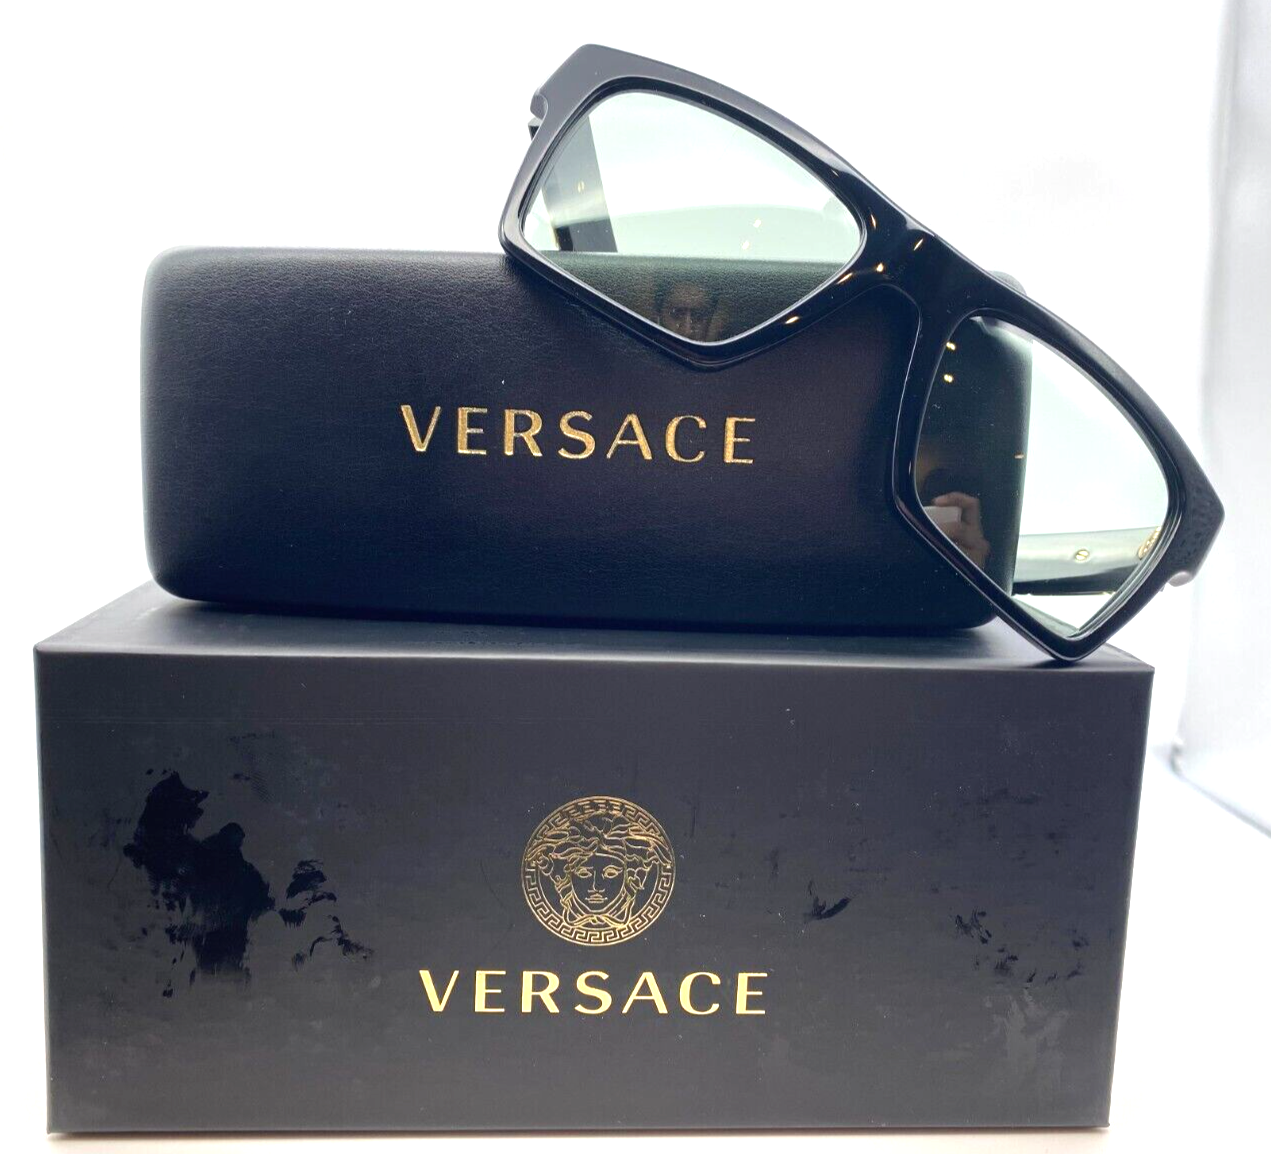 Versace VE4445 GB1/M1 Black/Photo Green Rectangular 54mm Men's Sunglasses